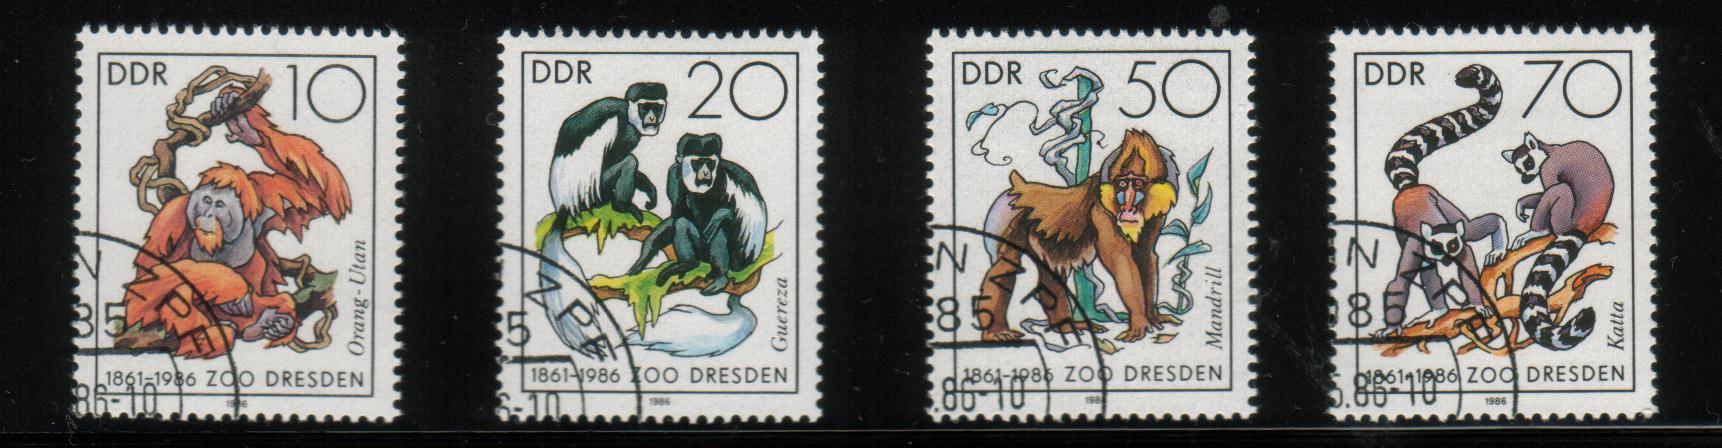 DDR 1986 DRESDEN ZOO (APES) SET OF 4 VFU - Affen